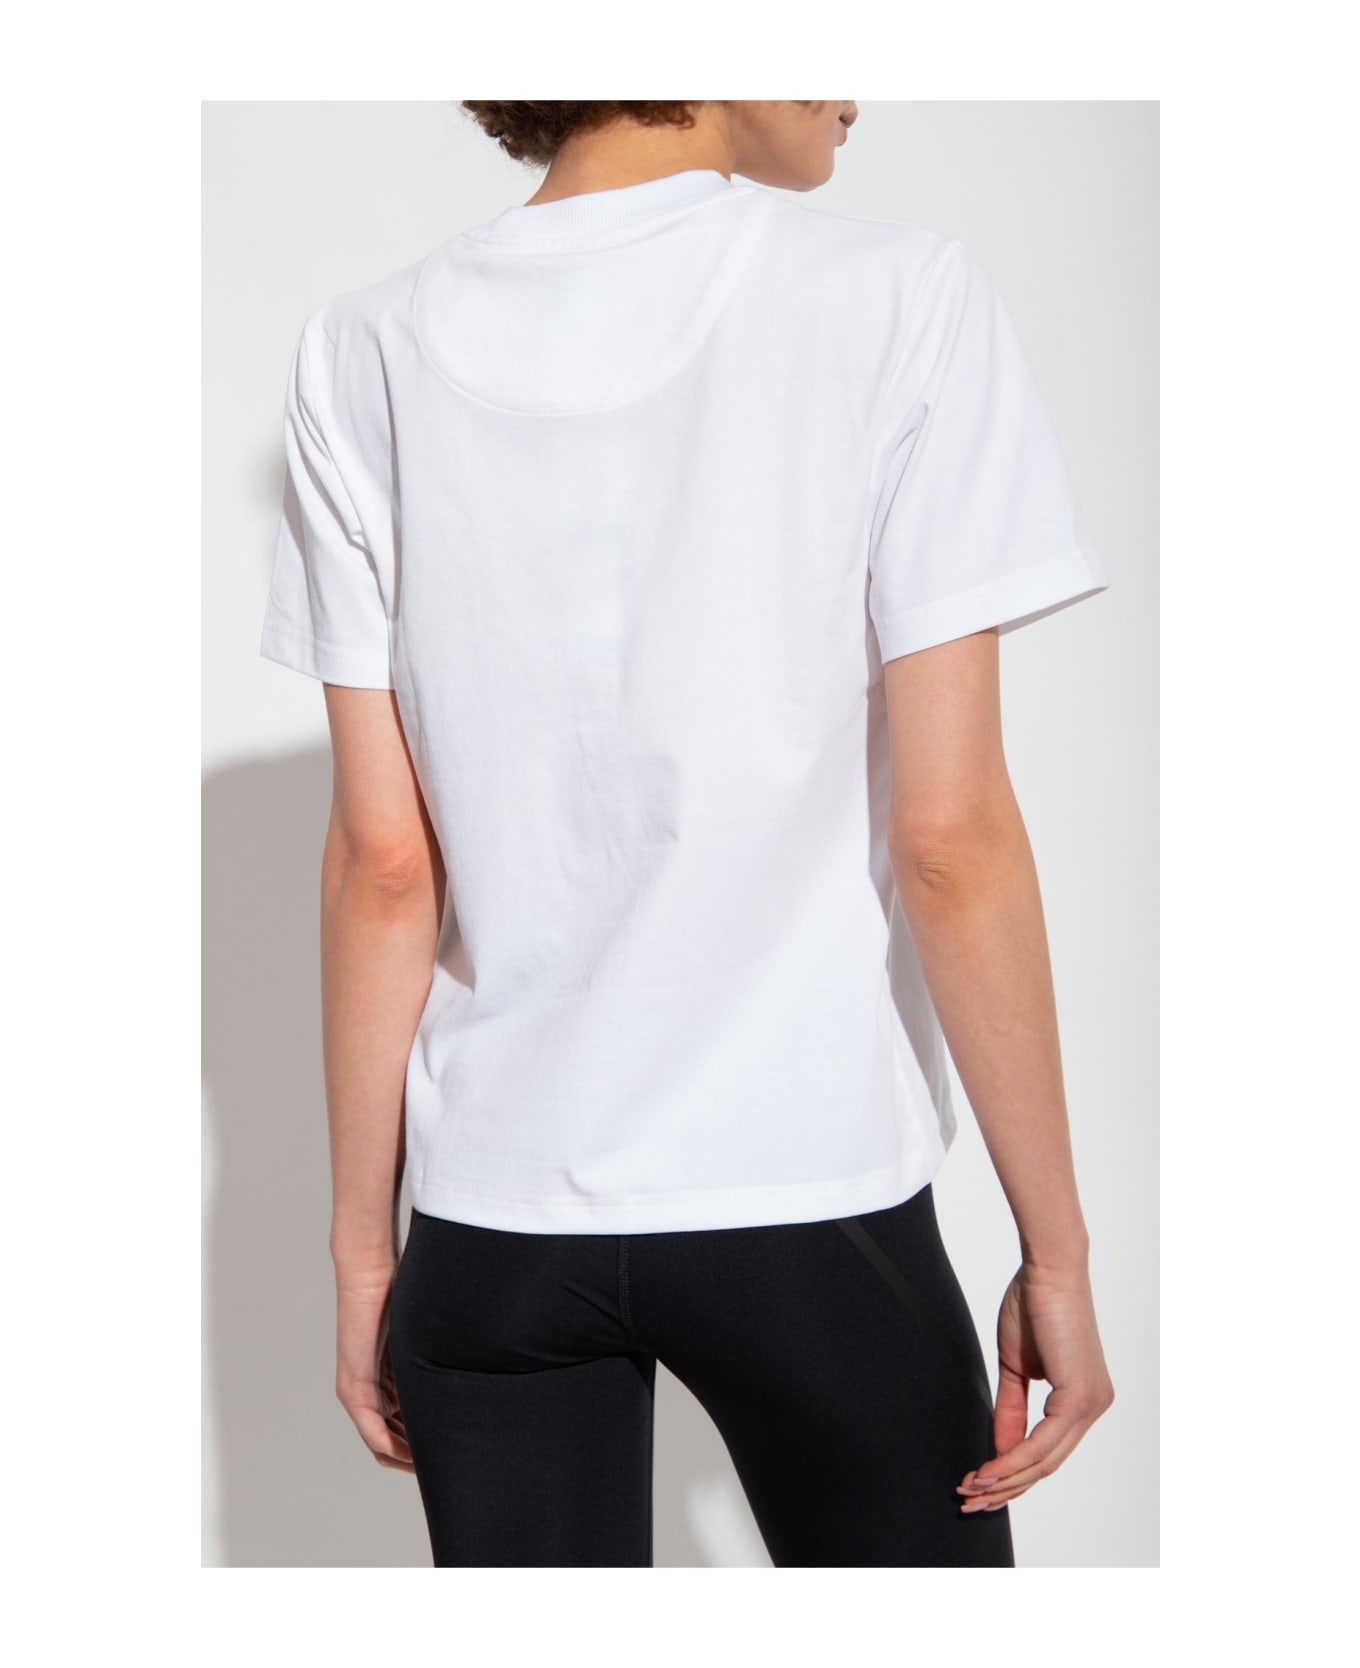 Adidas by Stella McCartney T-shirt With Logo - White